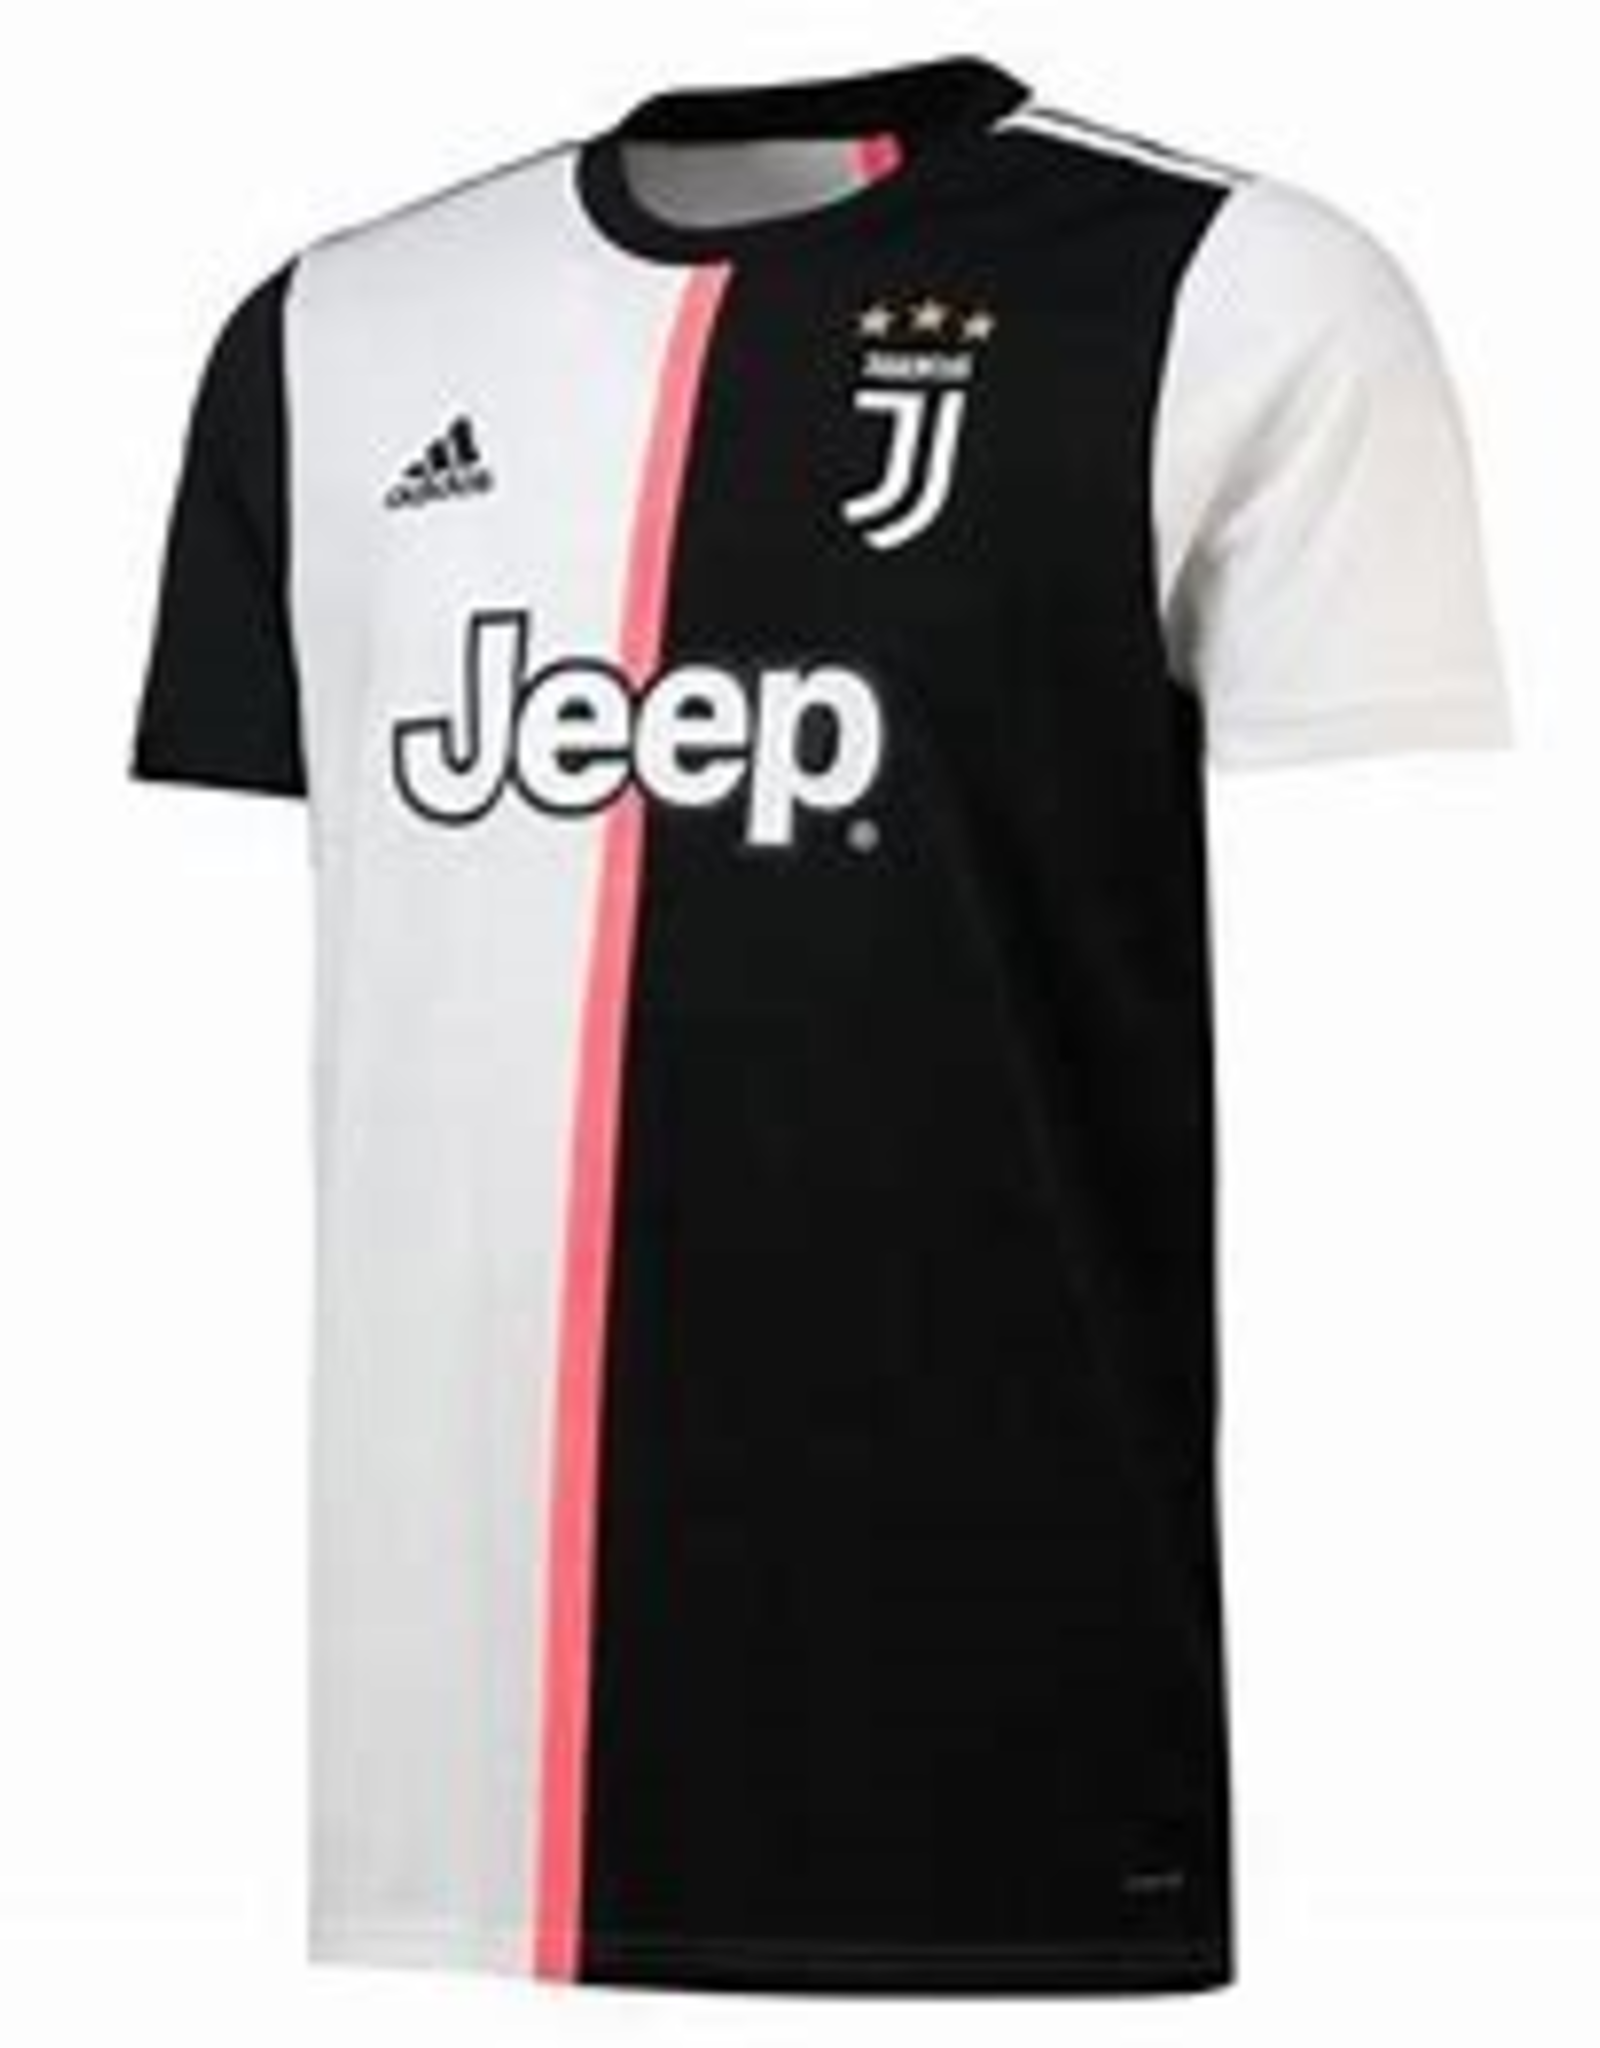 Adidas Juventus home shirt sr